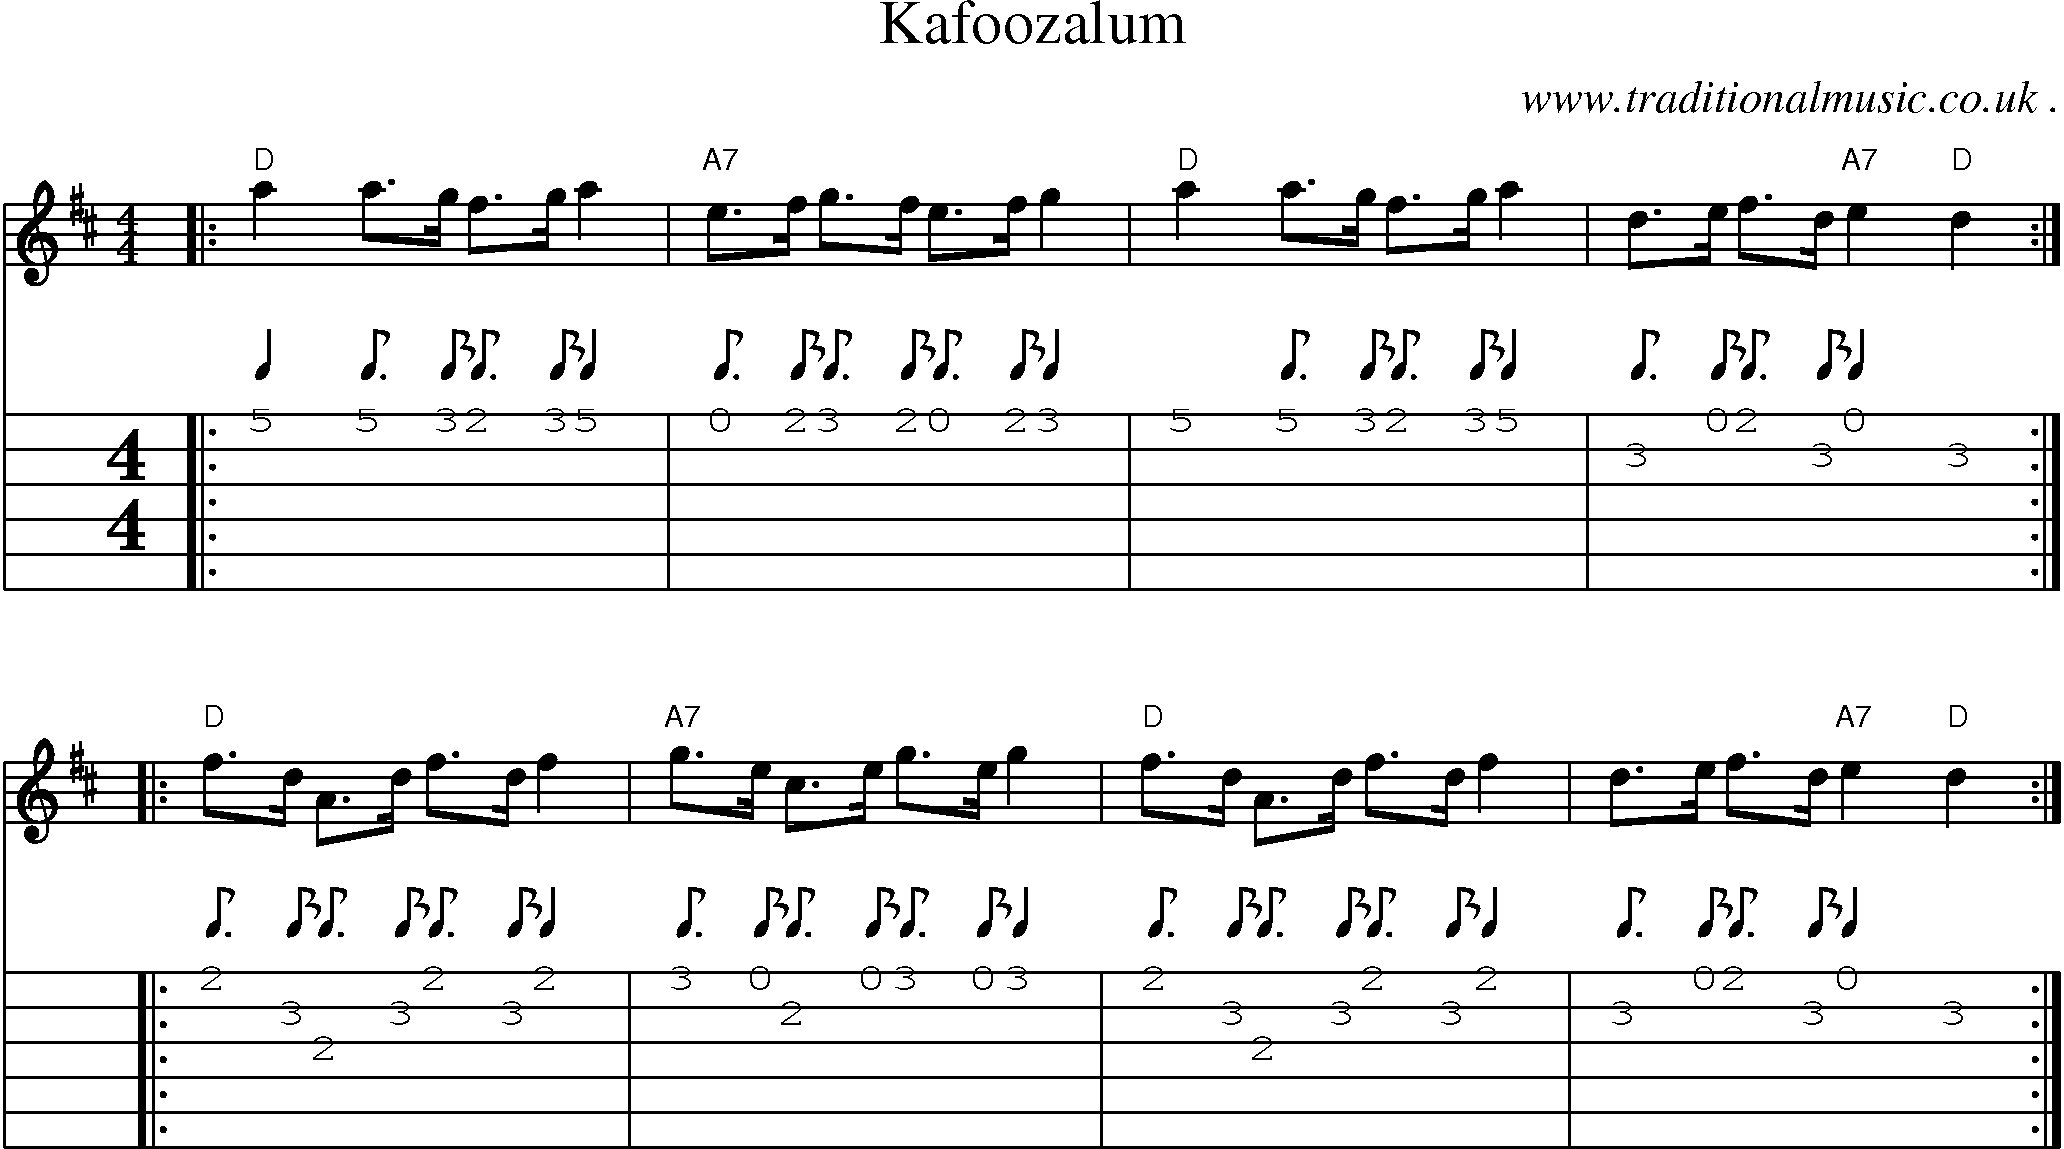 Sheet-music  score, Chords and Guitar Tabs for Kafoozalum